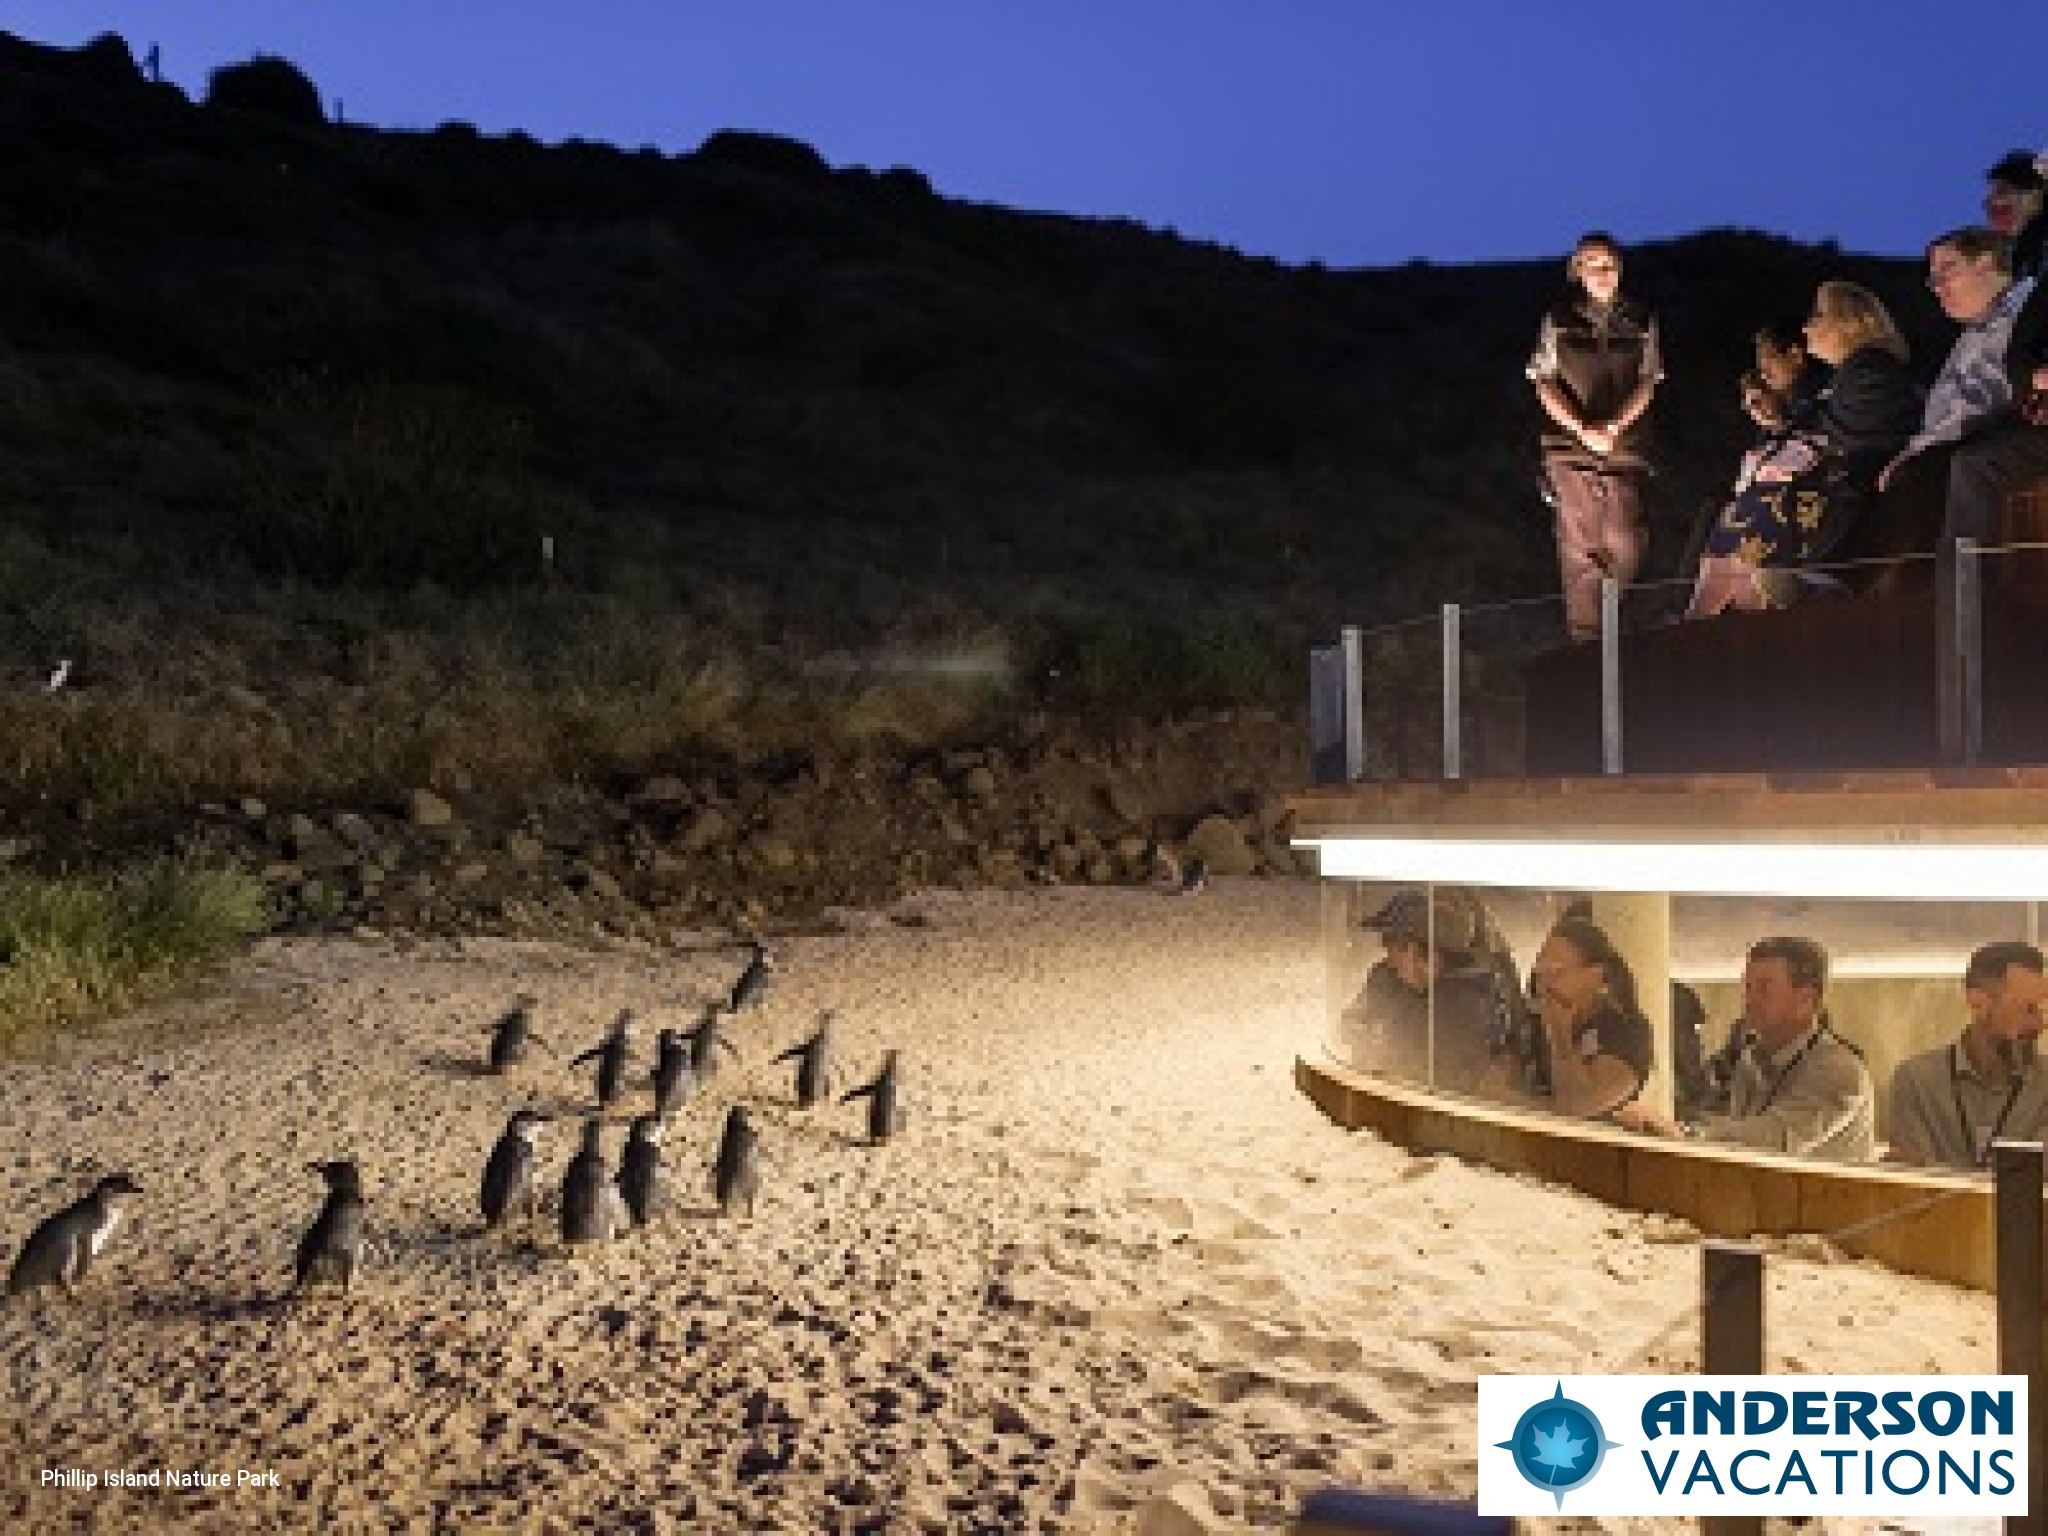 Penguin Parade - Phillip Island Nature Park